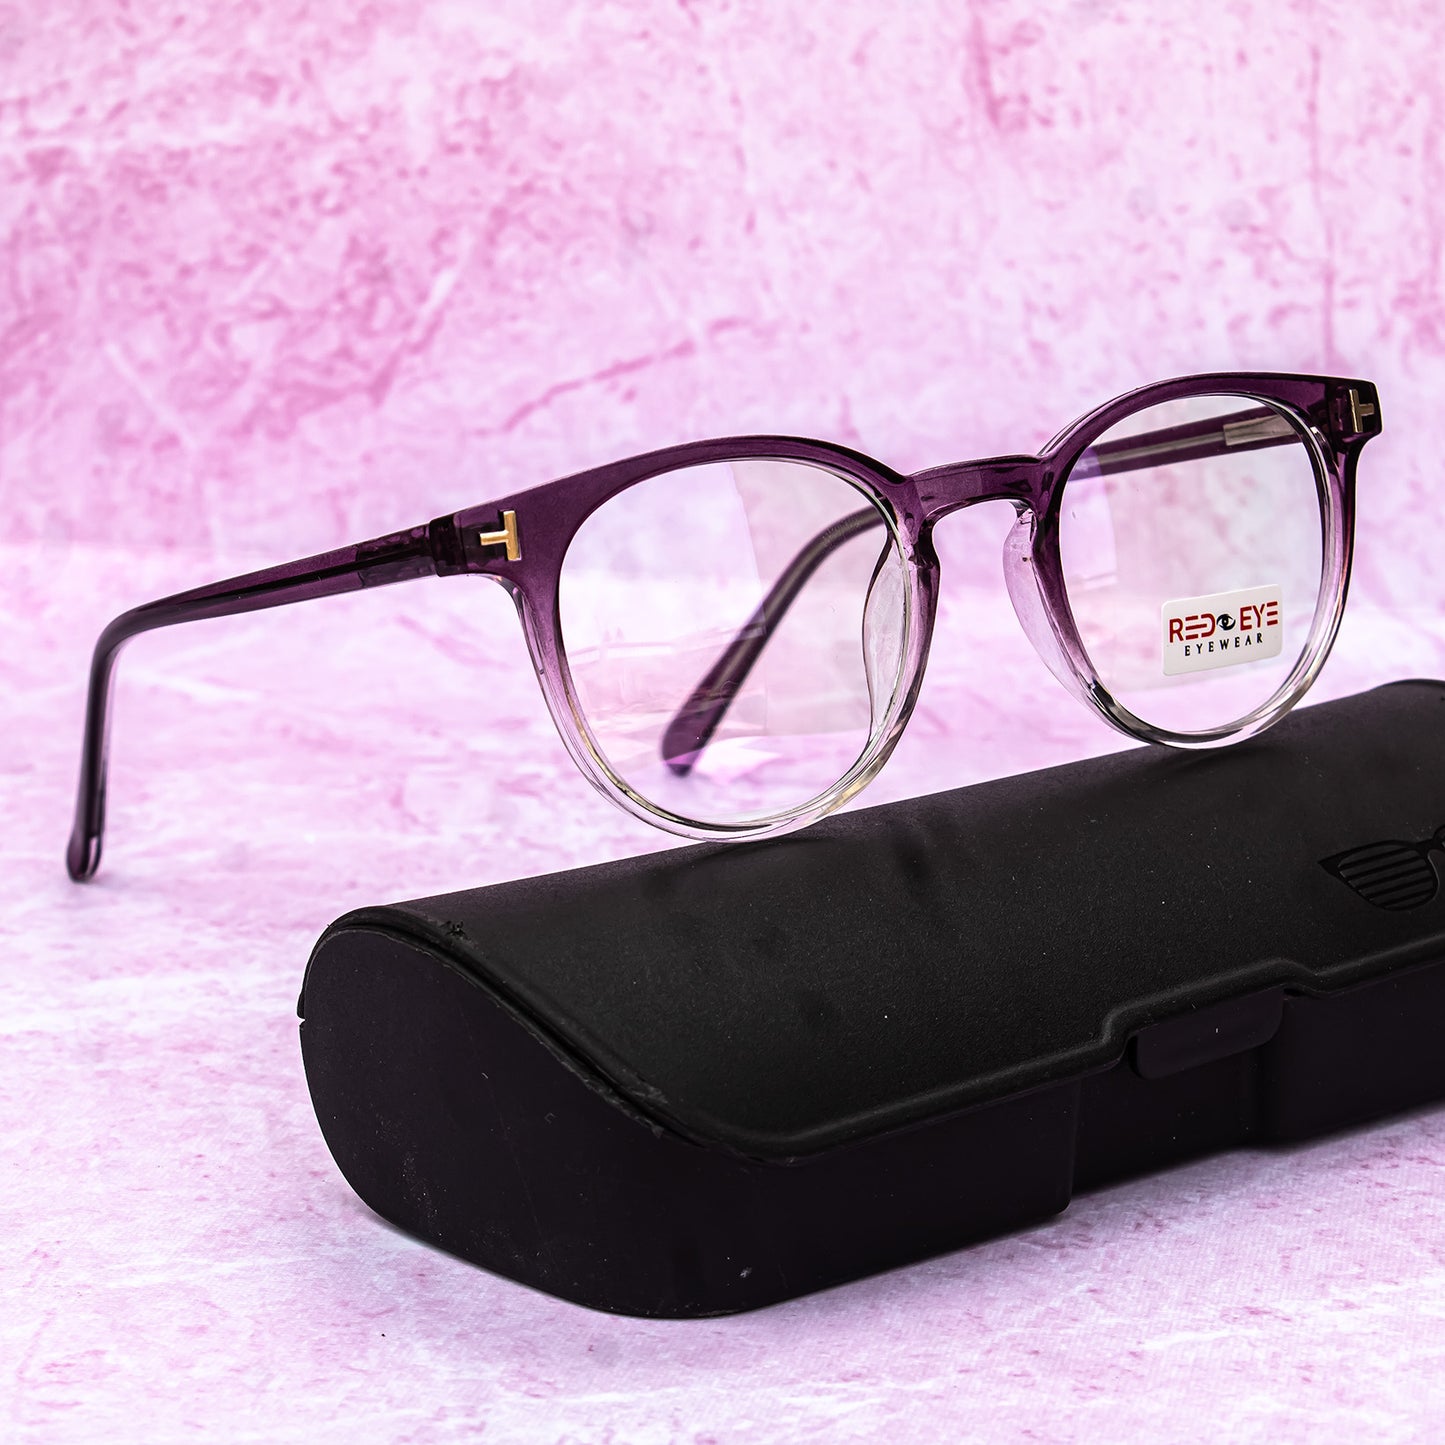 Jiebo Pink Rimmed Eyeglasses for Women